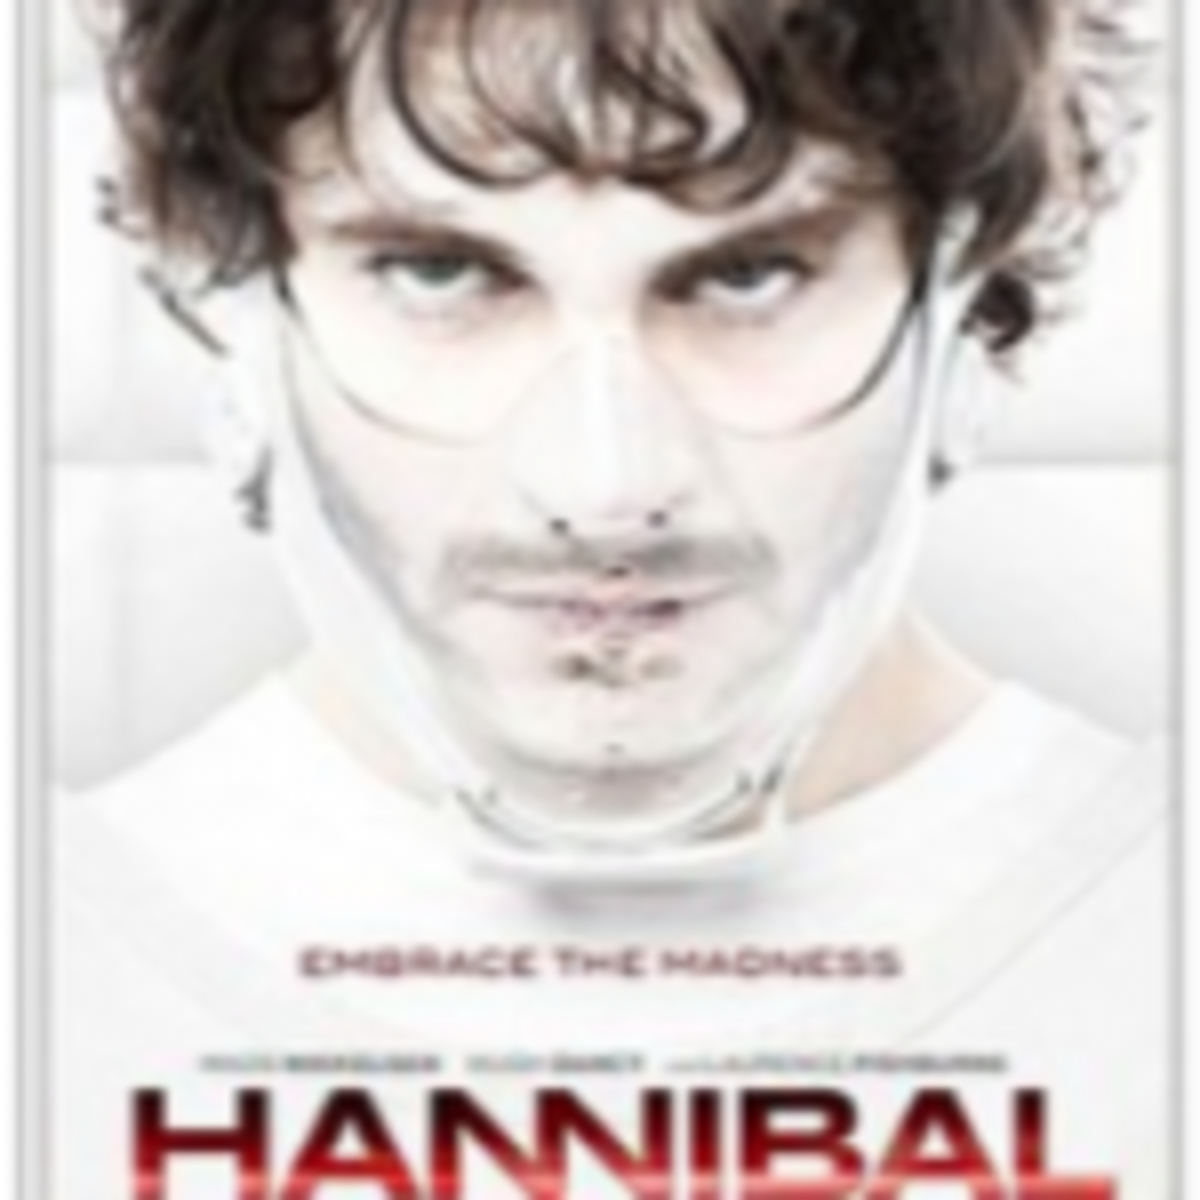 Hannibal TV series villain